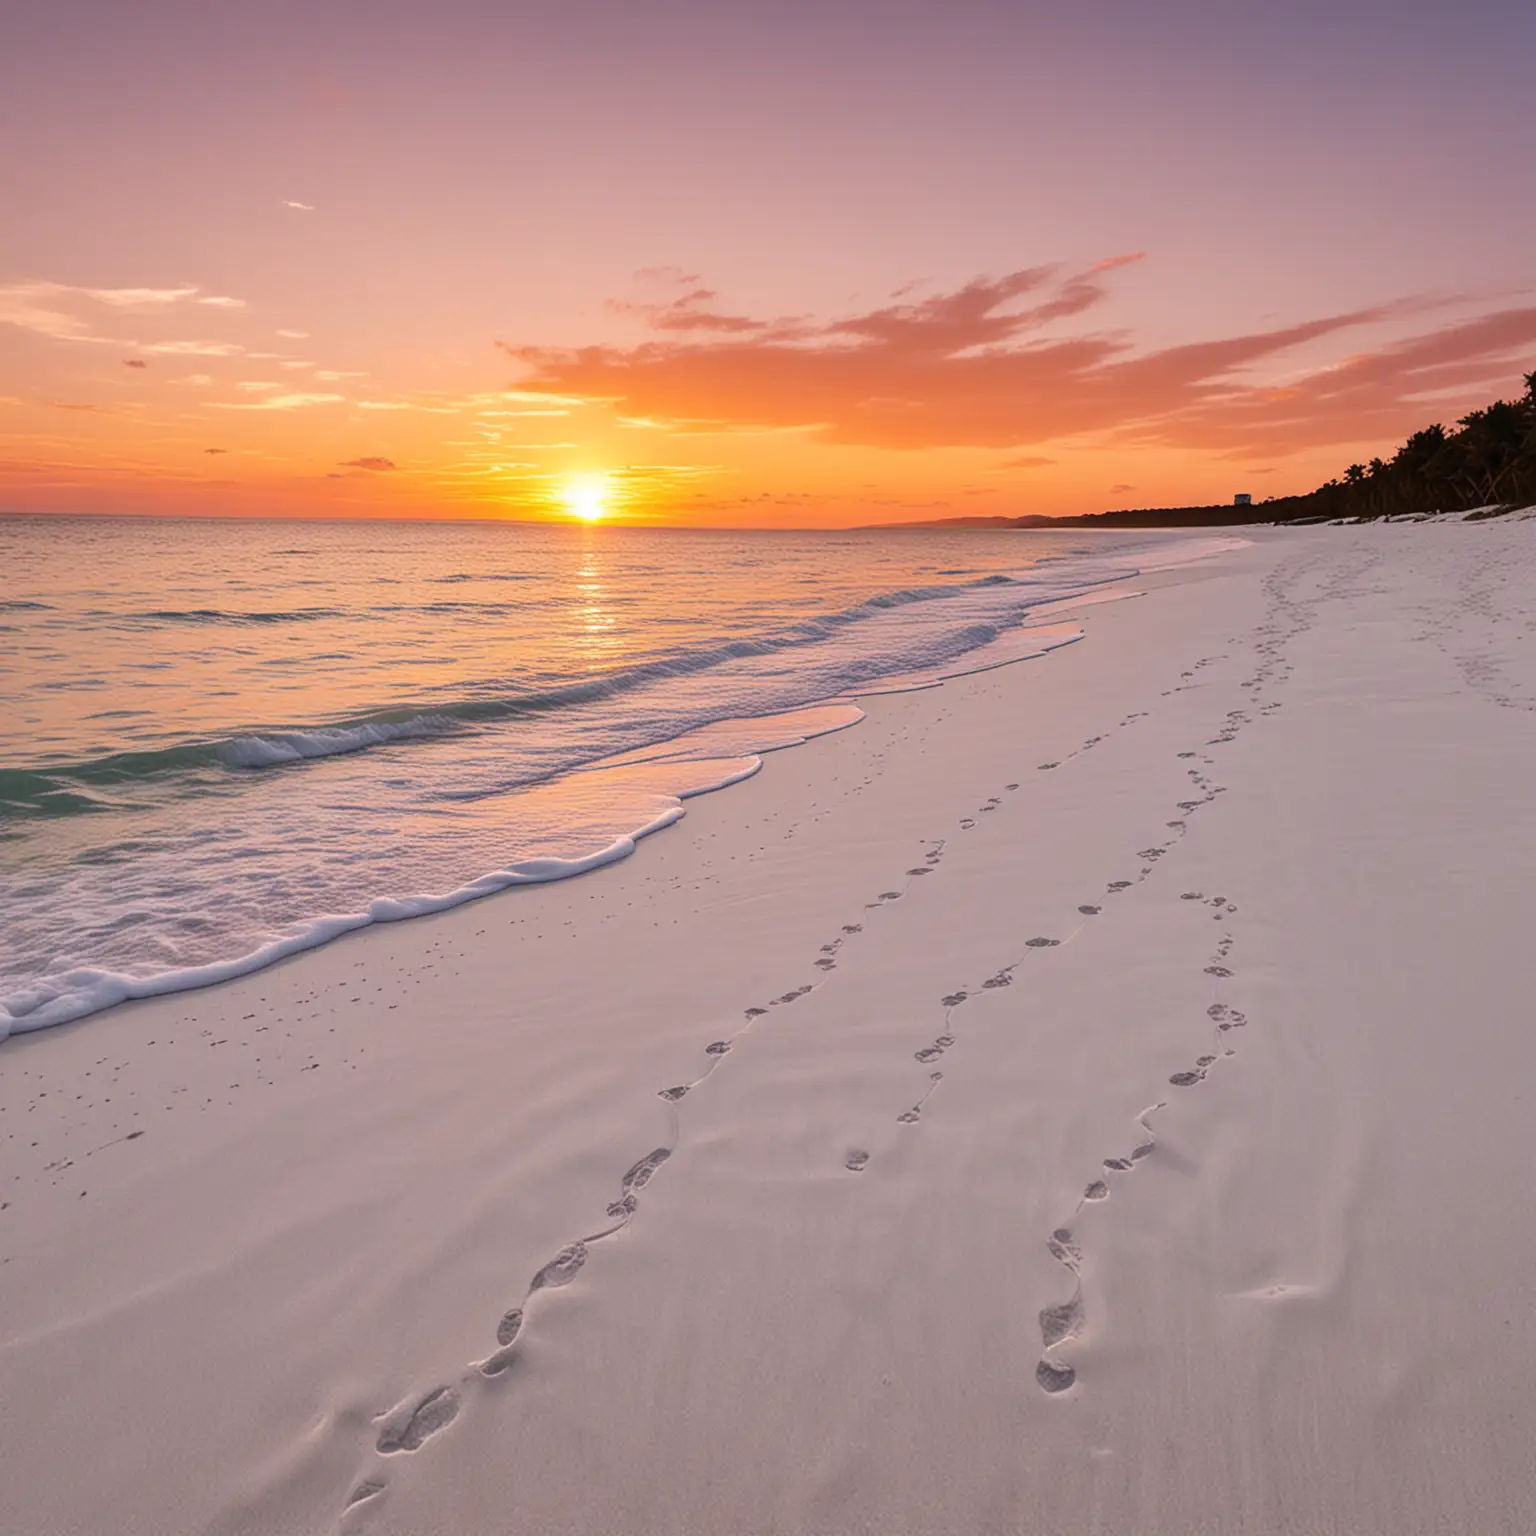 Tranquil Sunset Scene on a White Sand Beach